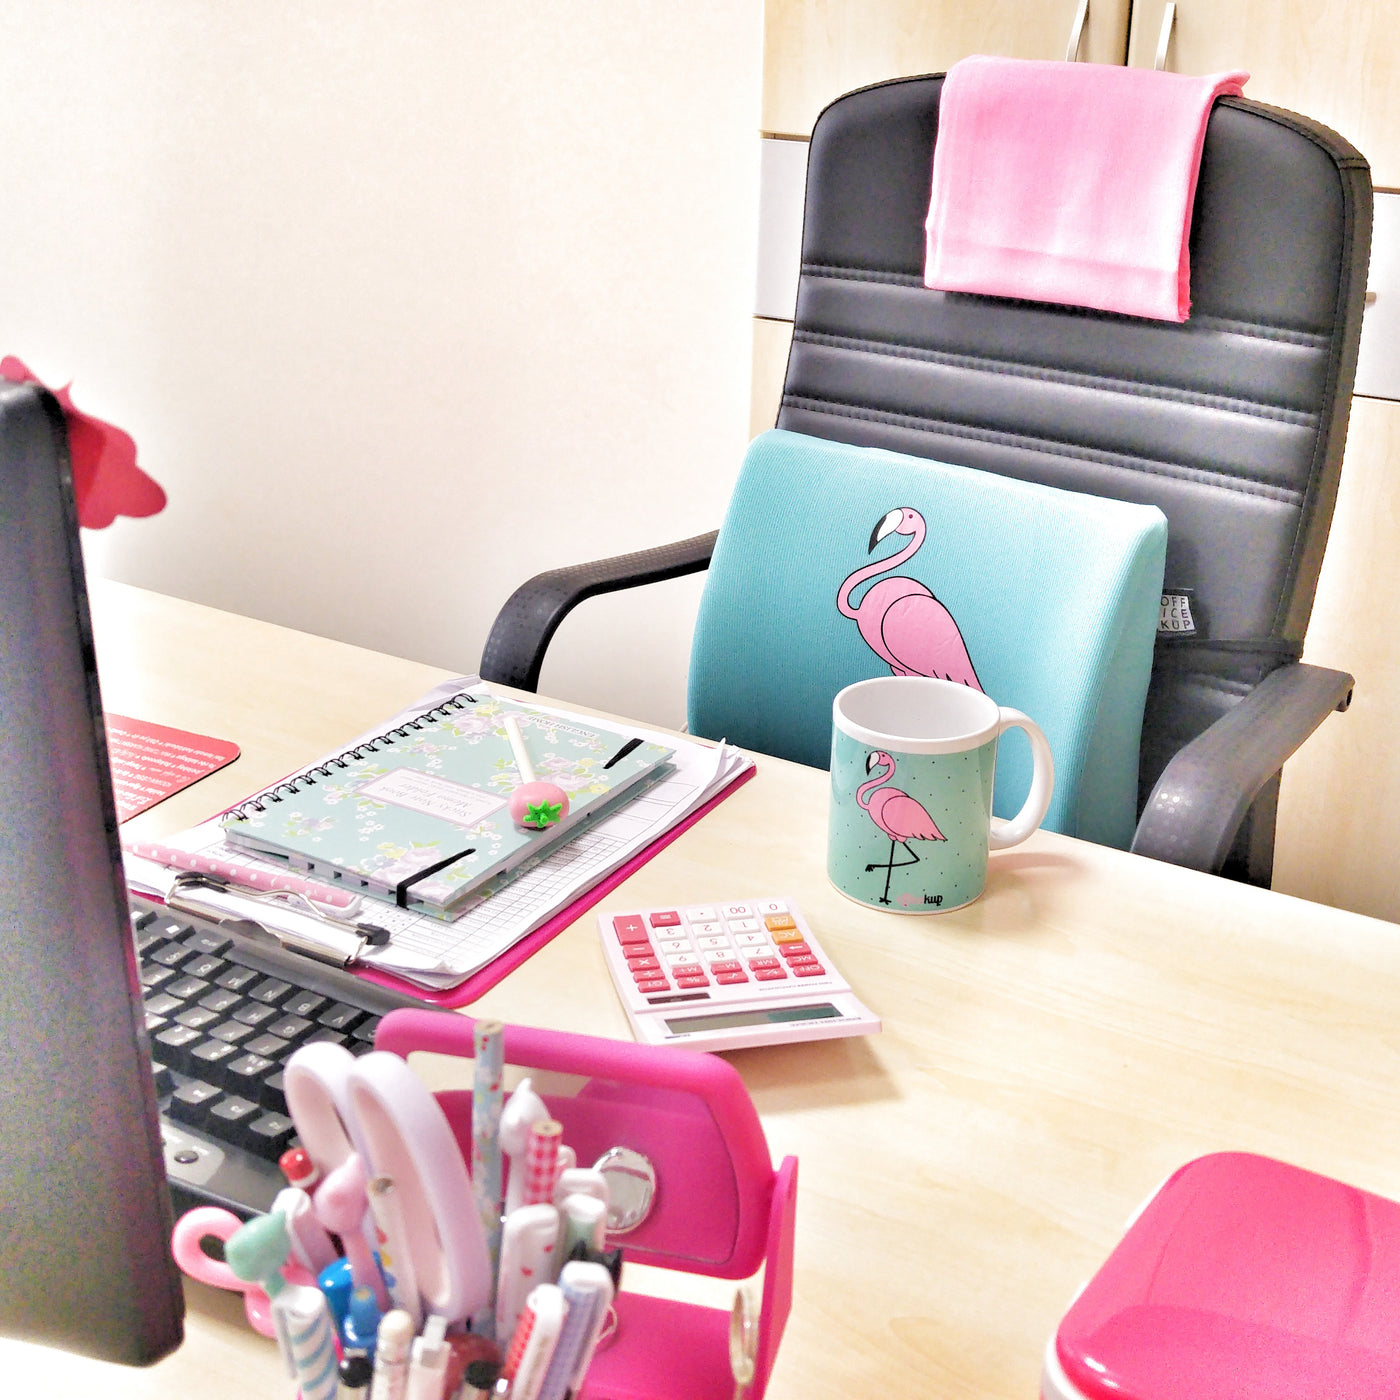 officekup bel destek ofis koltuk yastigi fil flamingo kedi pembe